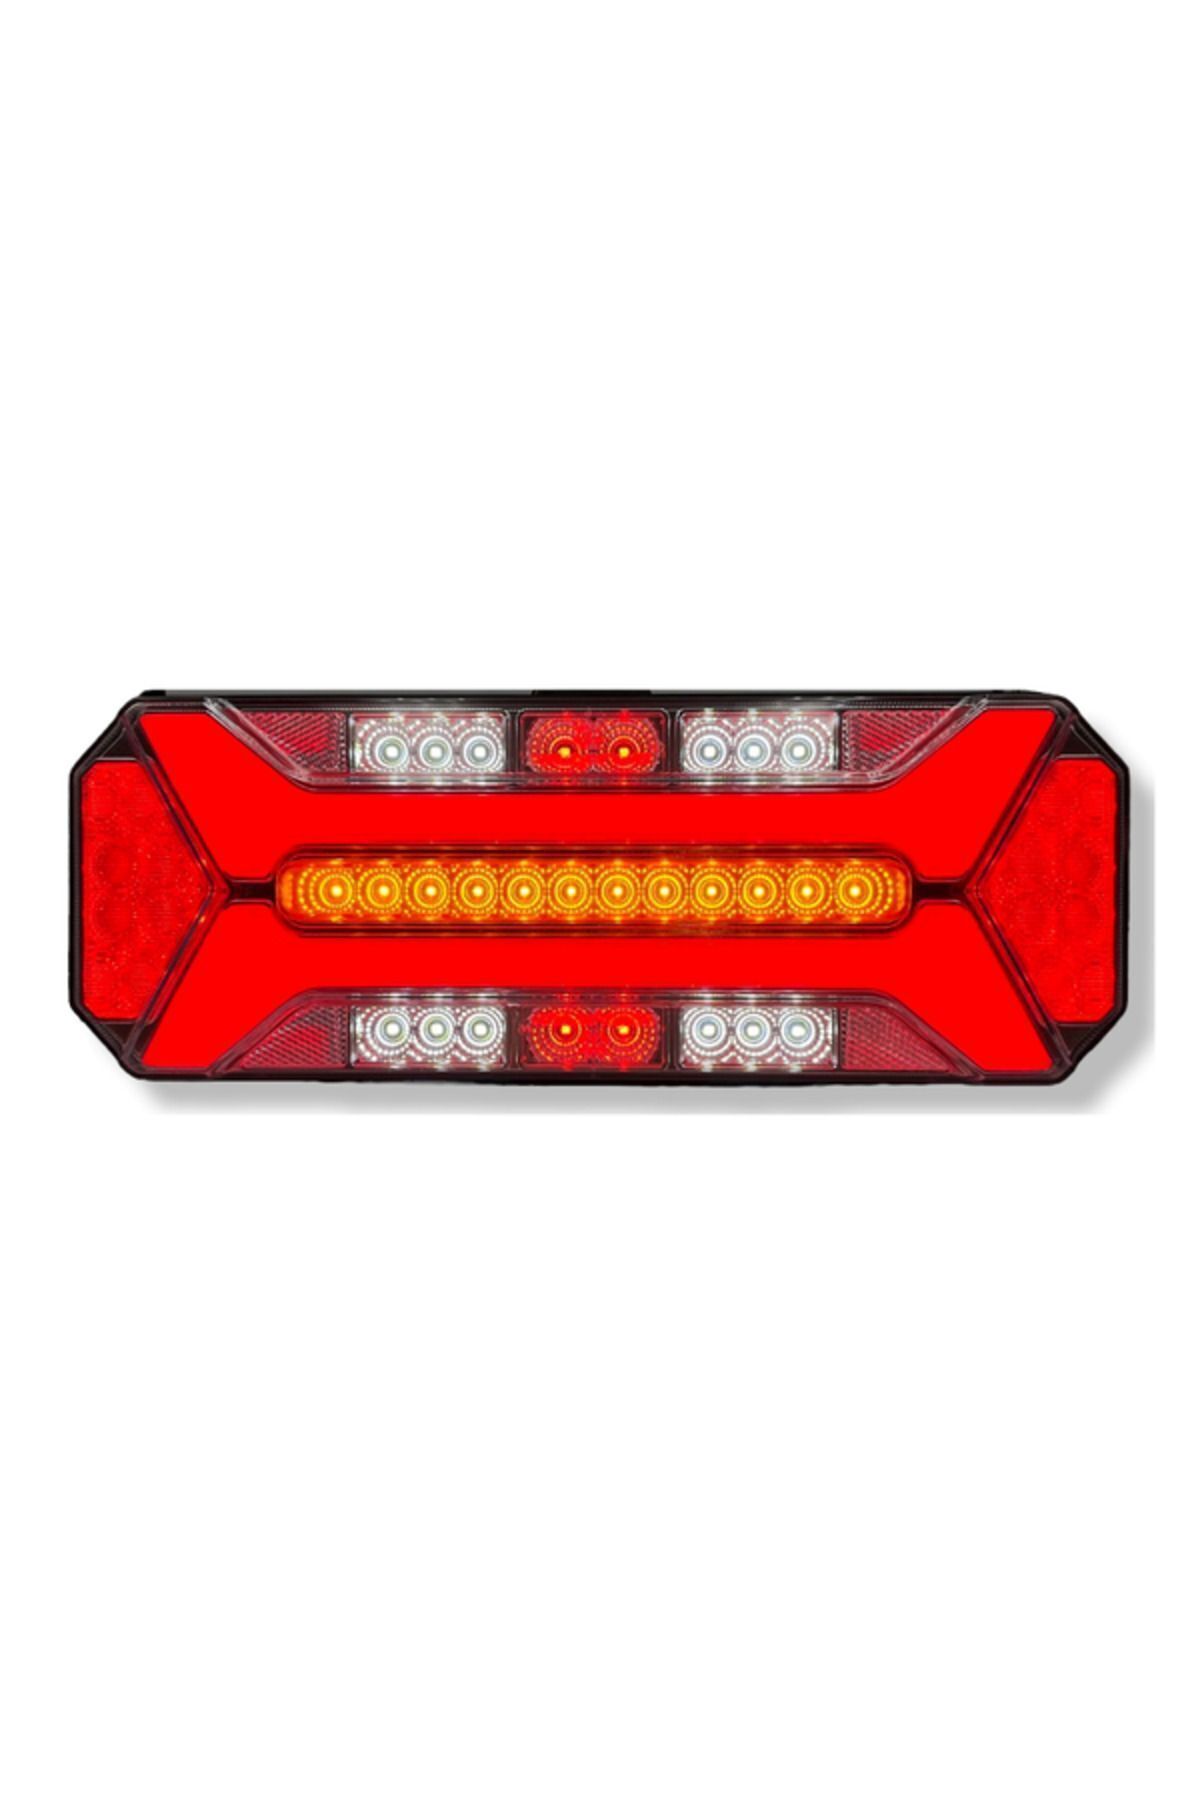 ÇERAY Yeni Star Neon Led Stop Lambası Kayar Sinyalli Kamyon-tır-Dorse-karavan-kamyonet 12x24 Volt